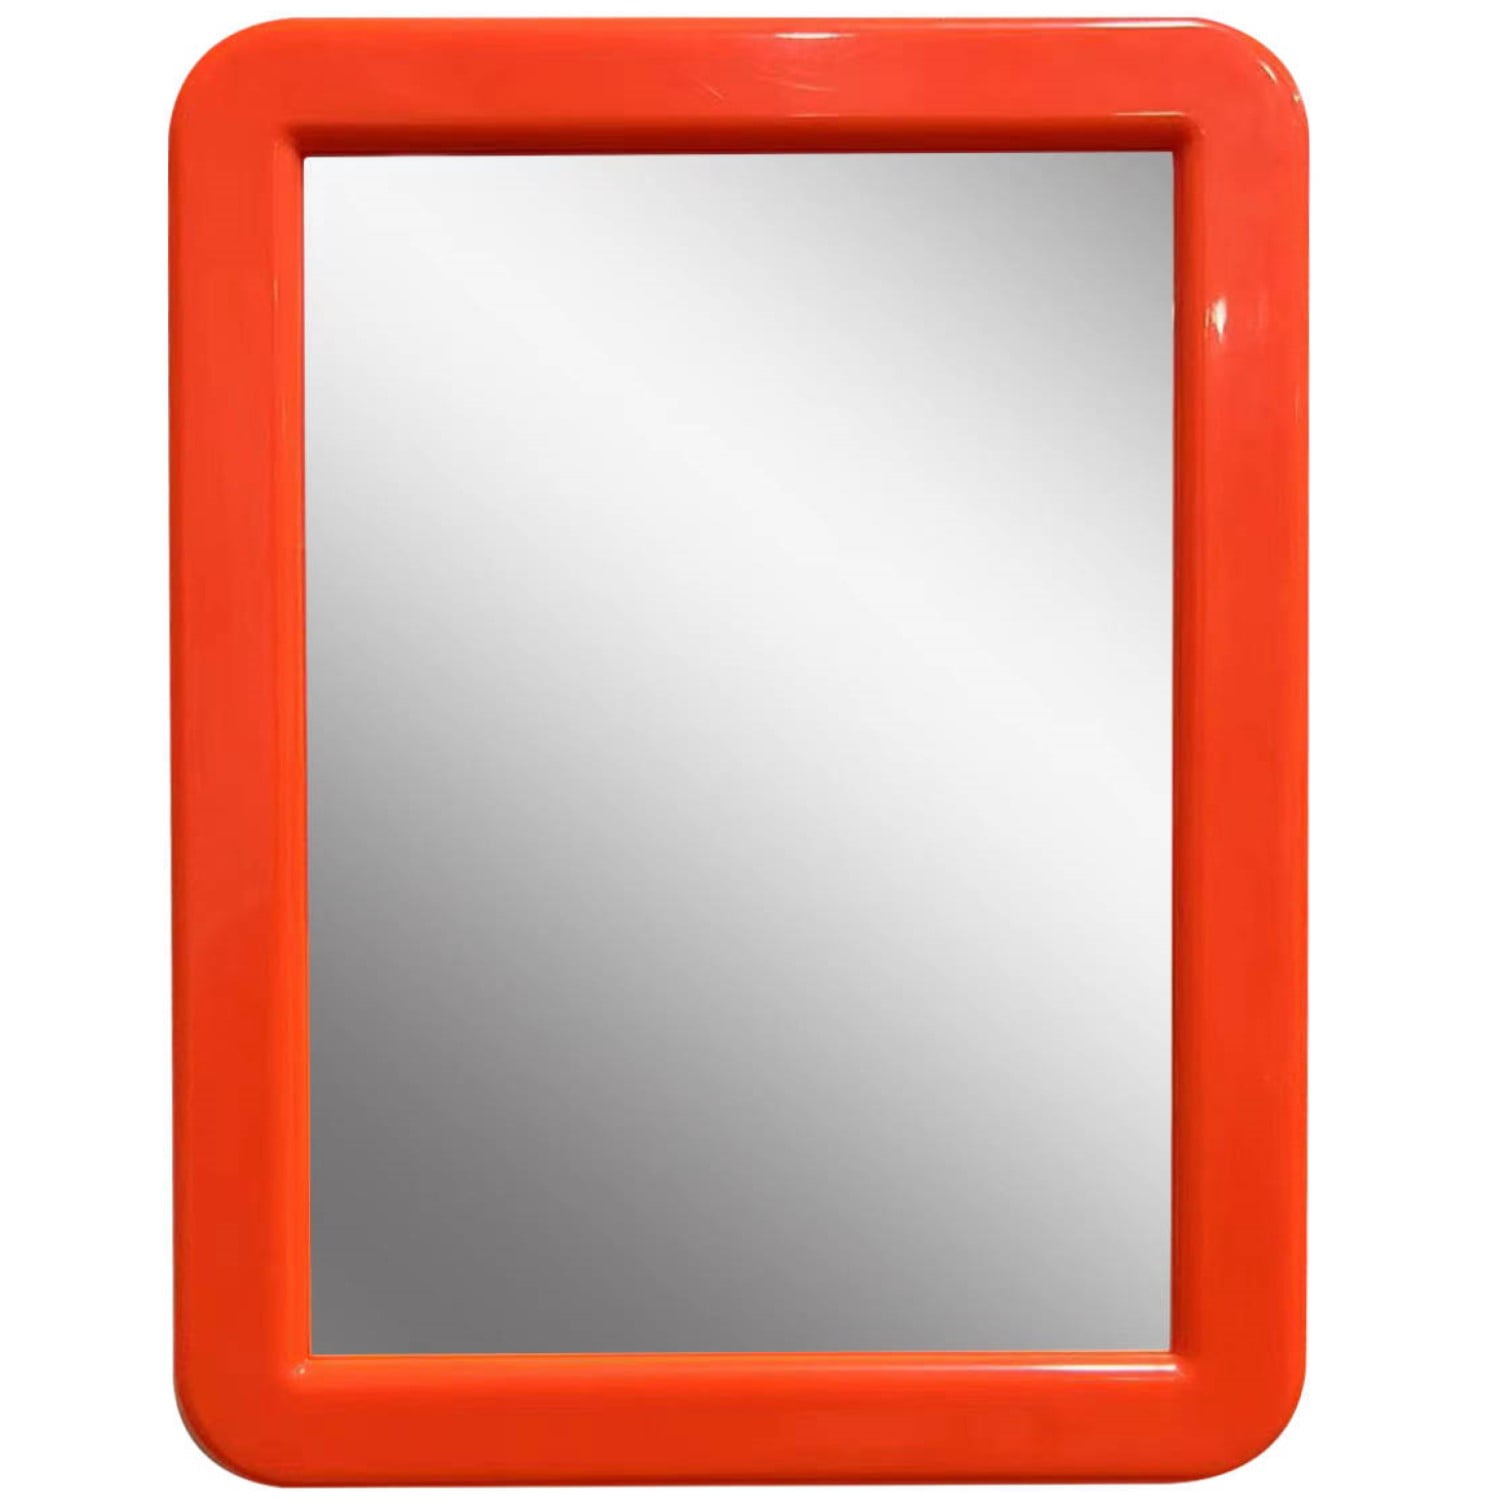 ARTLYMERS MIRR-PK Magnetic Locker Mirror, 5 x 7 Real glass Small